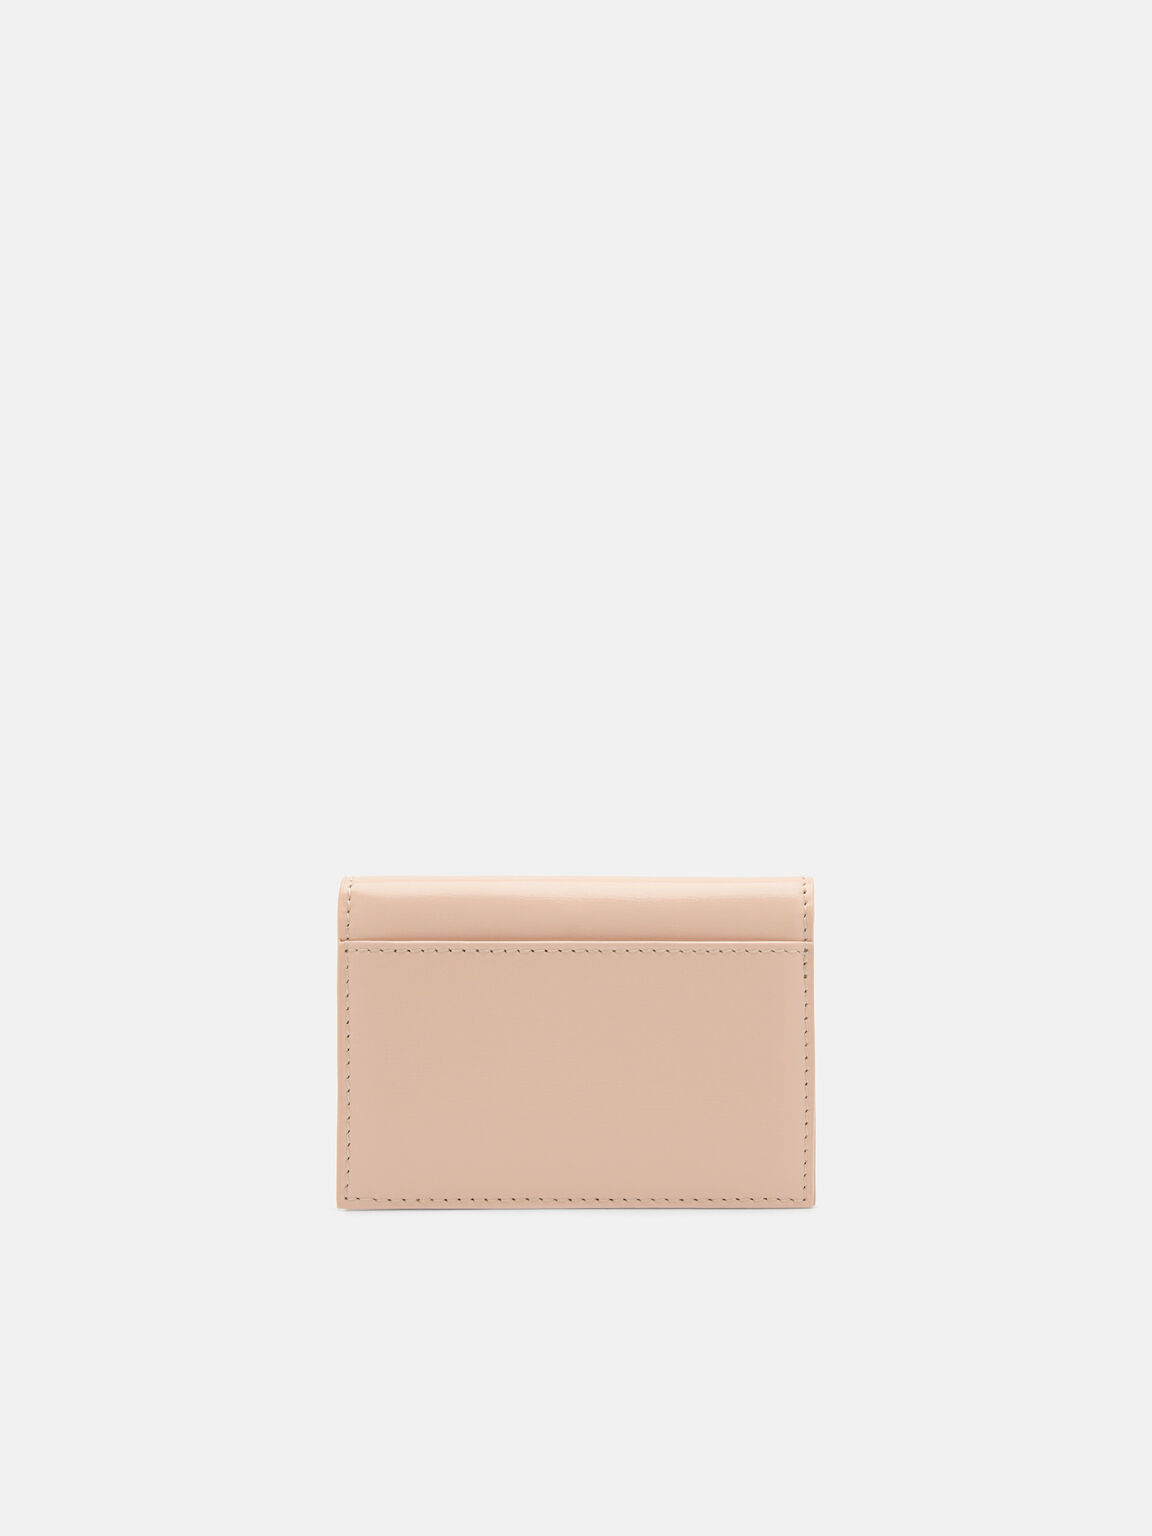 PEDRO Studio Leather Bi-Fold Card Holder, Nude, hi-res